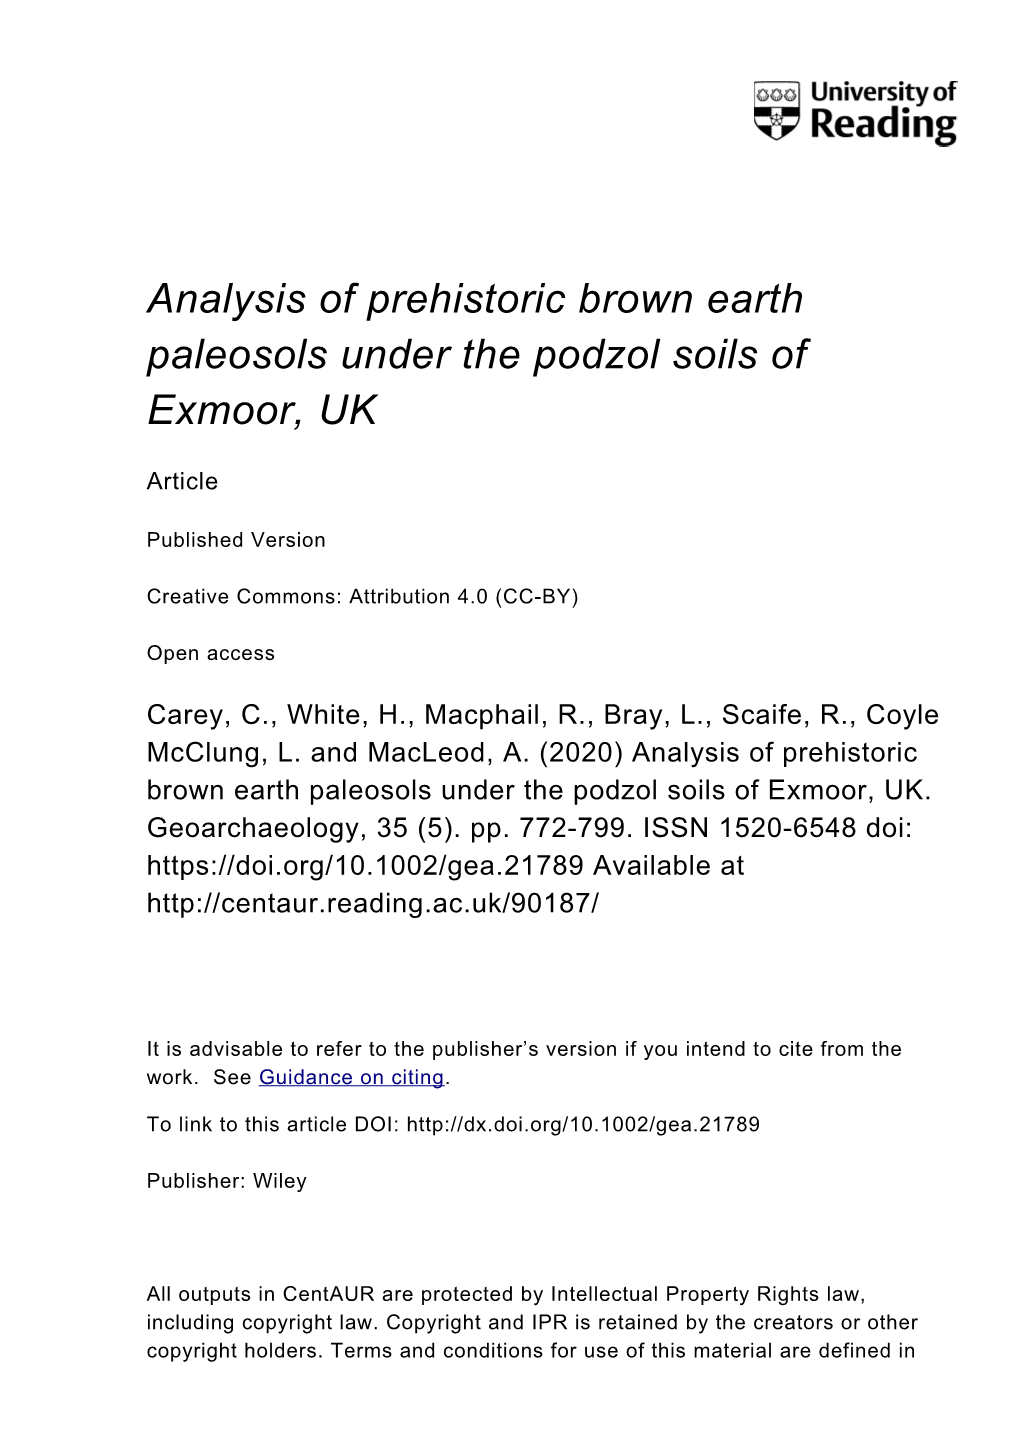 Analysis of Prehistoric Brown Earth Paleosols Under the Podzol Soils of Exmoor, UK